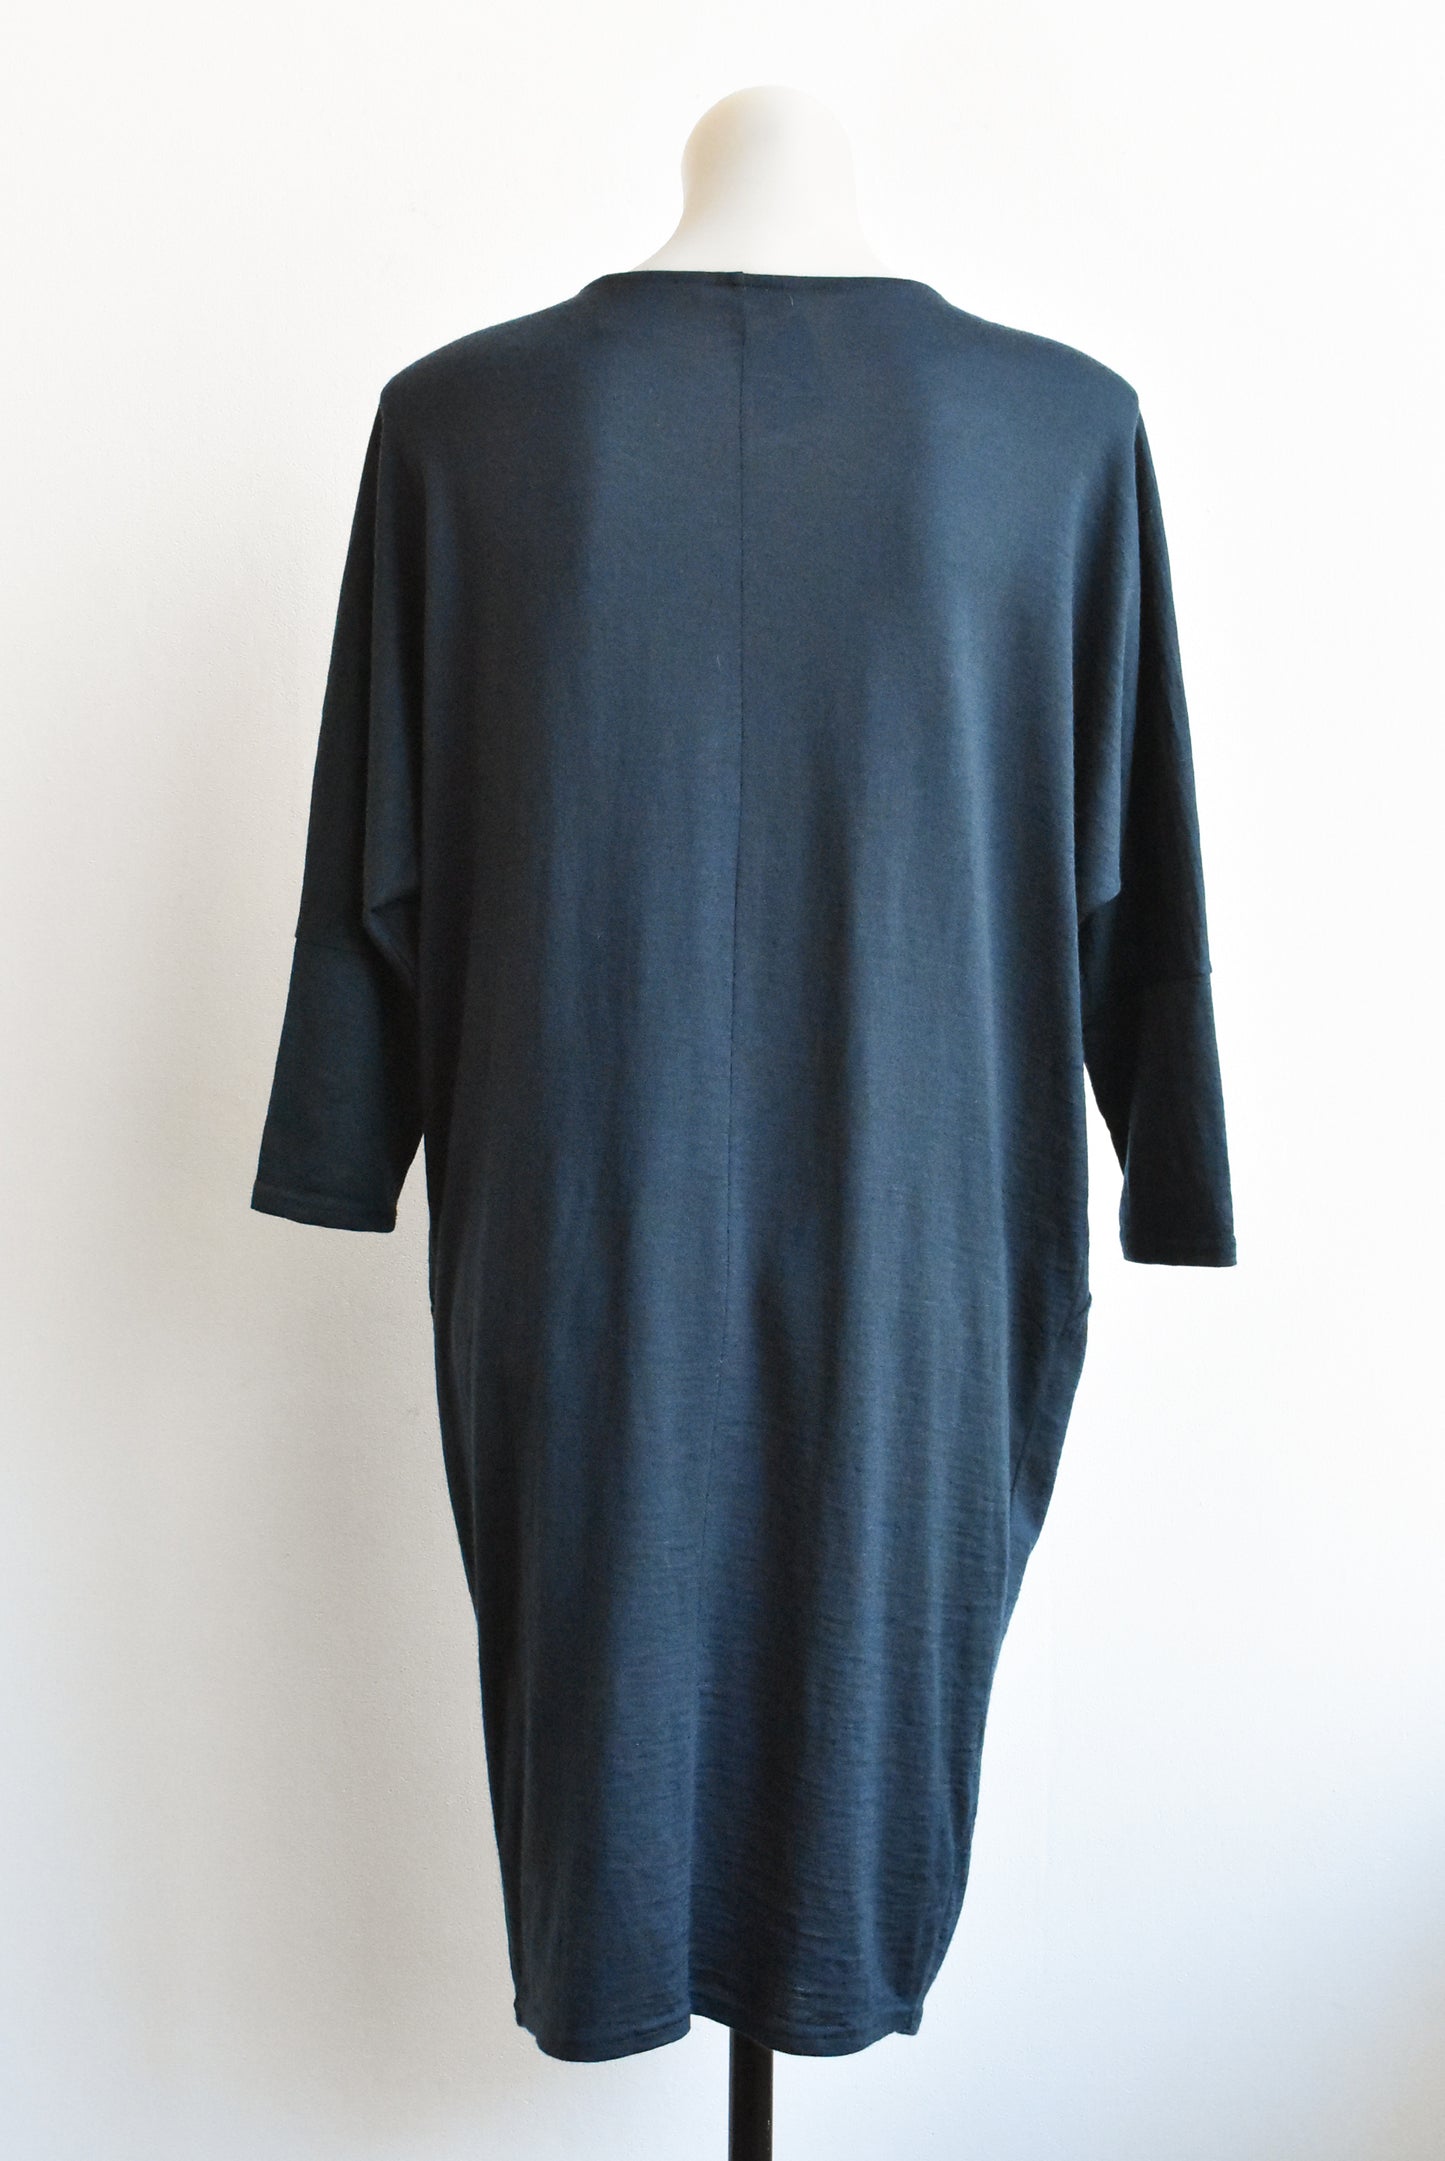 North South Merino merino wool long sleeve dress with pockets, M